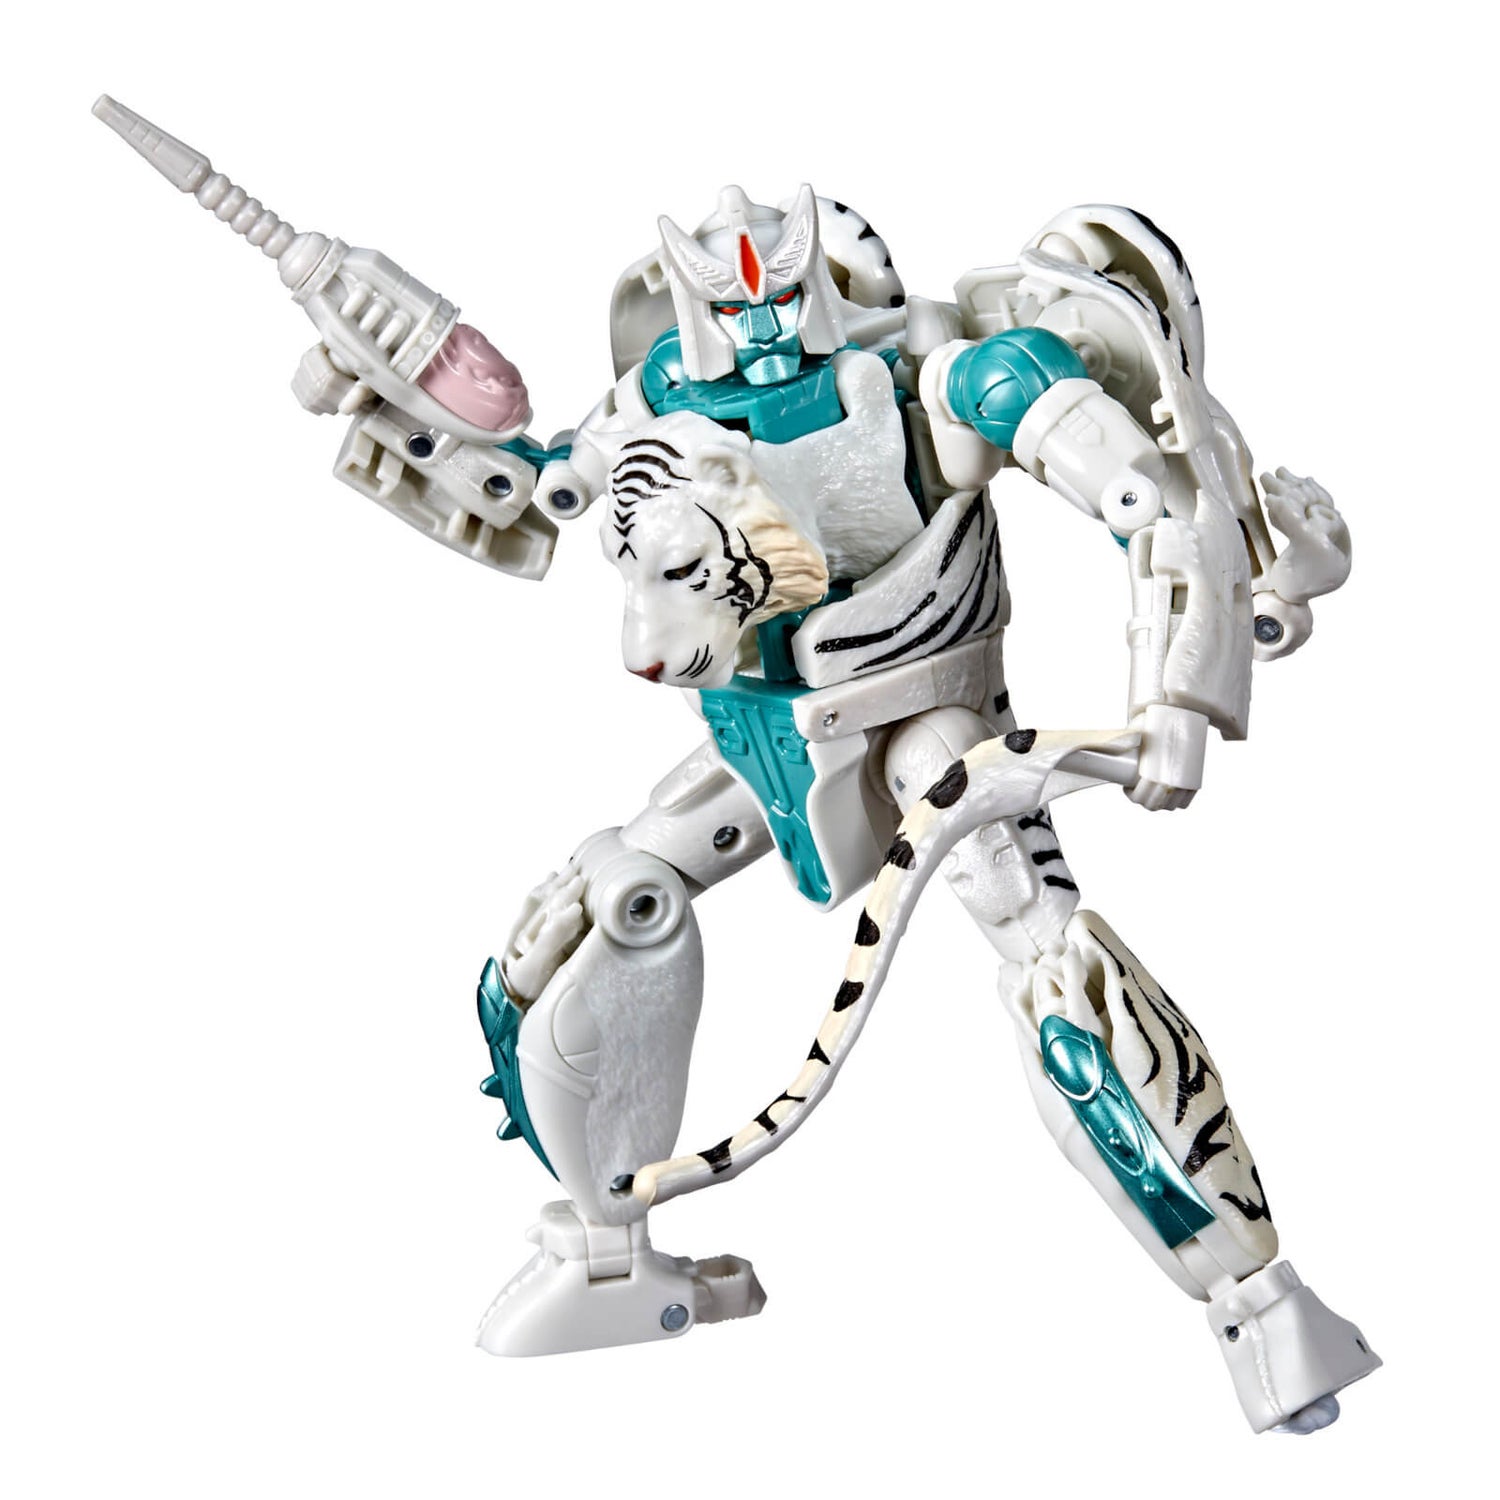 Hasbro Transformers Generations War for Cybertron: Kingdom Voyager WFC-K35 Tigatron Action Figure